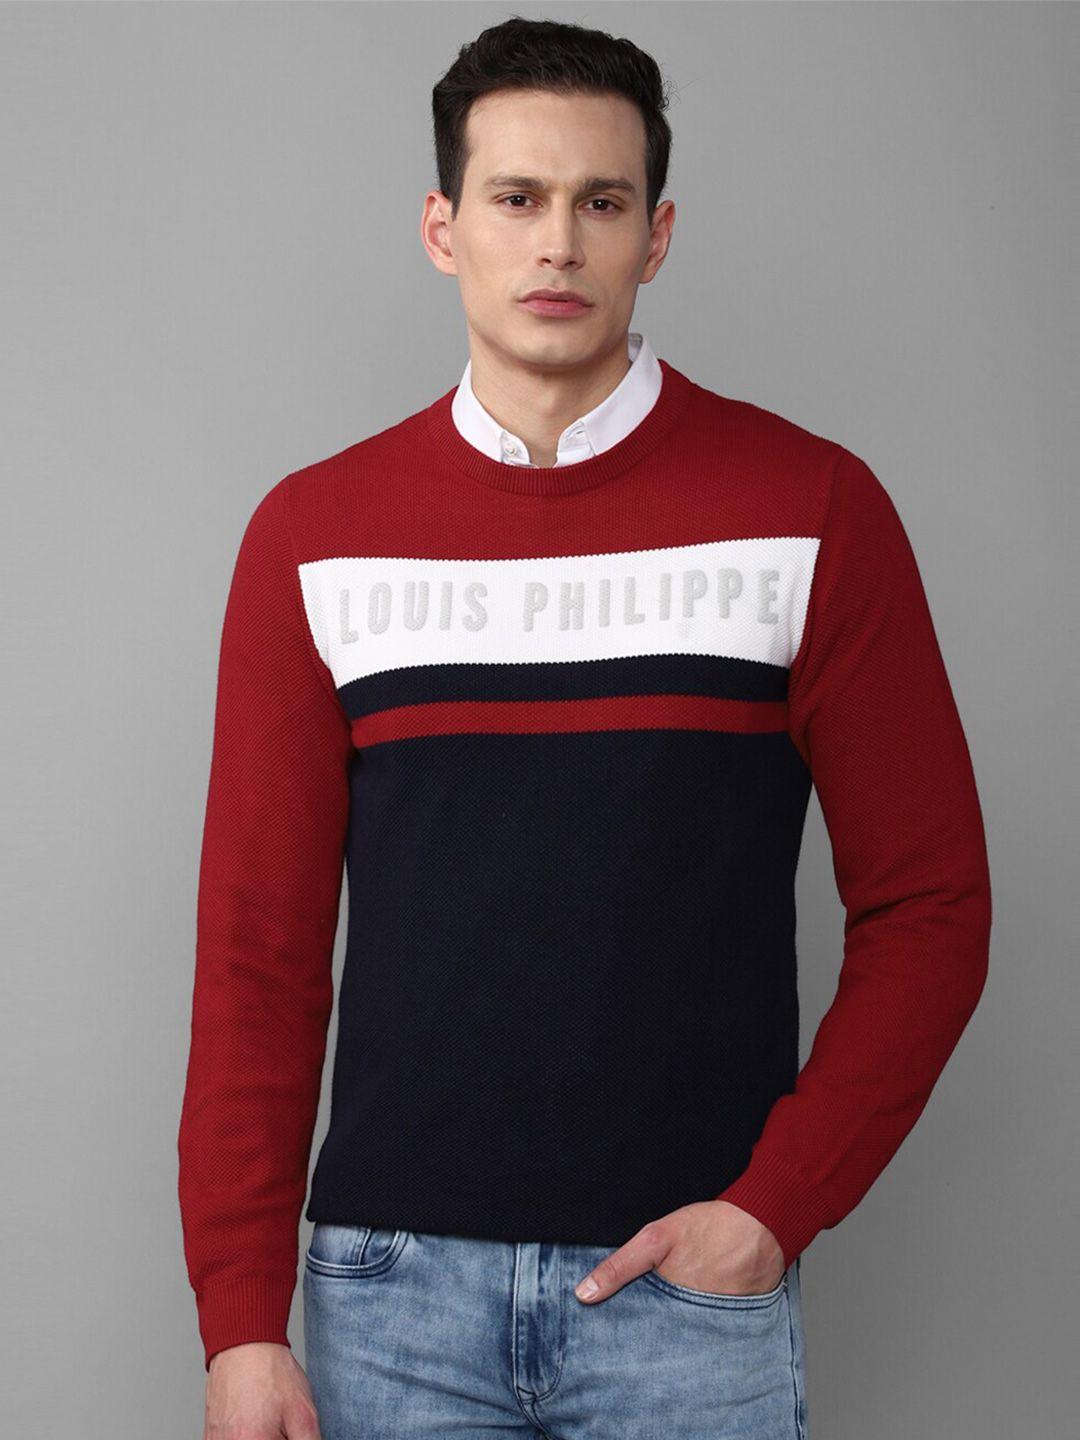 louis philippe sport men maroon & navy blue colourblocked pullover